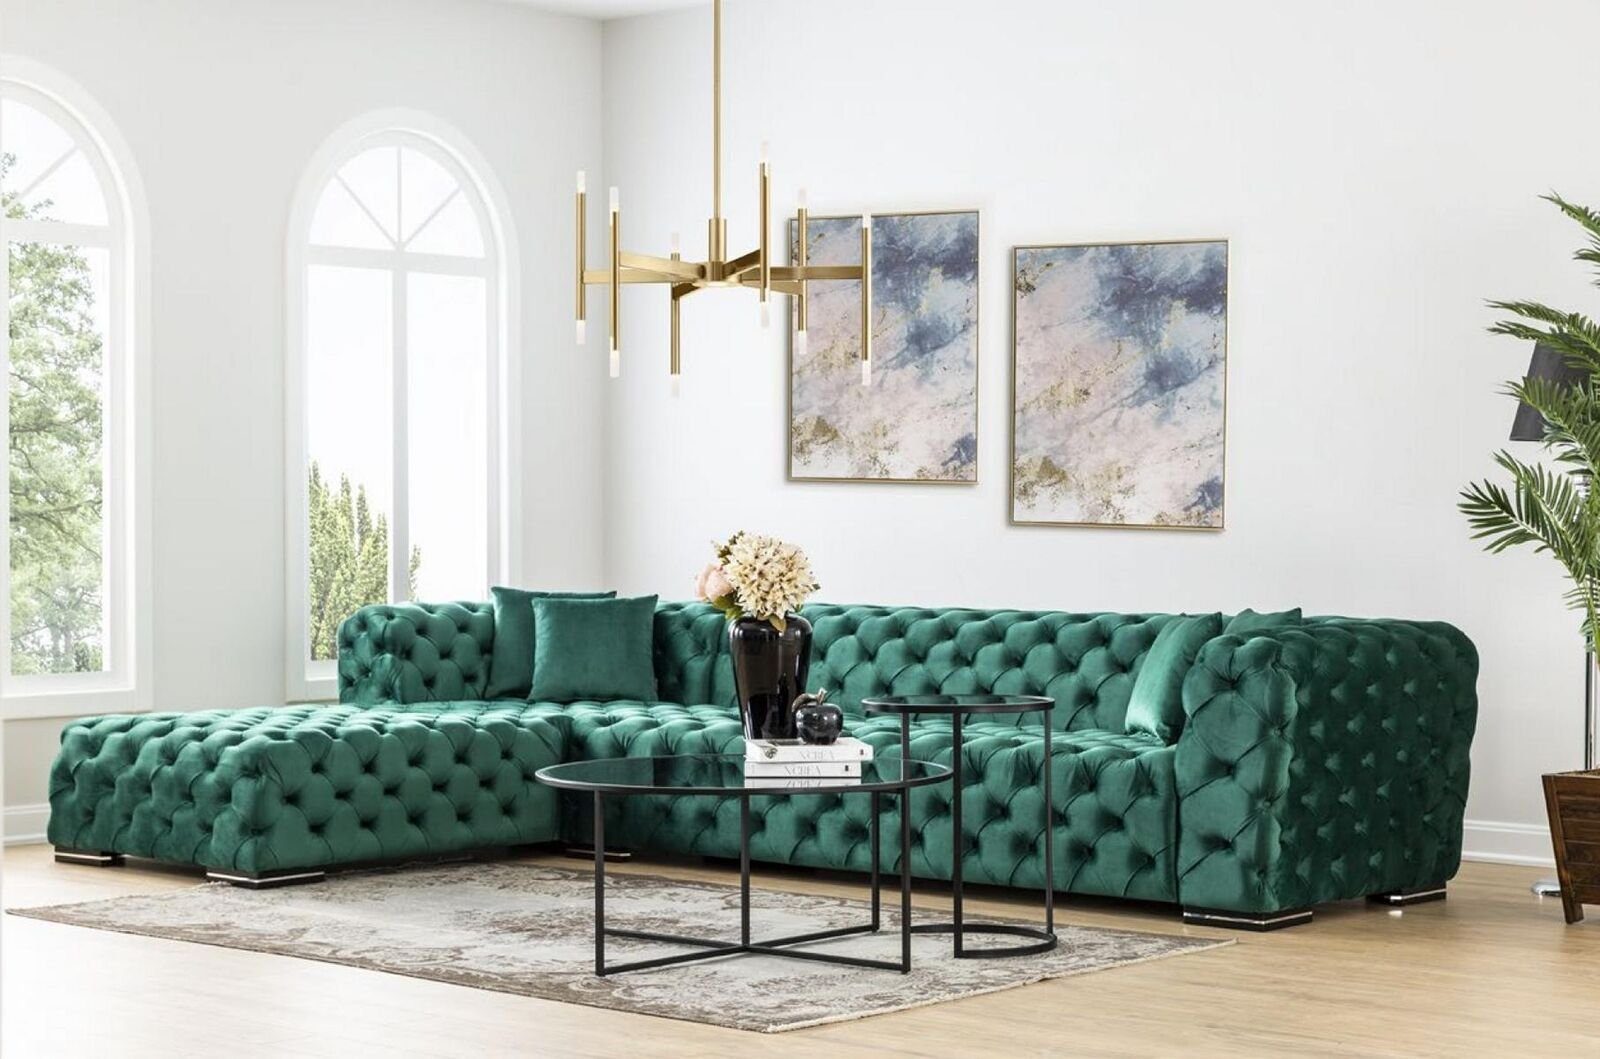 JVmoebel Ecksofa Ecksofa L Sofa Grün Eck Textil Polster Design Garnitur Form Neu Couch